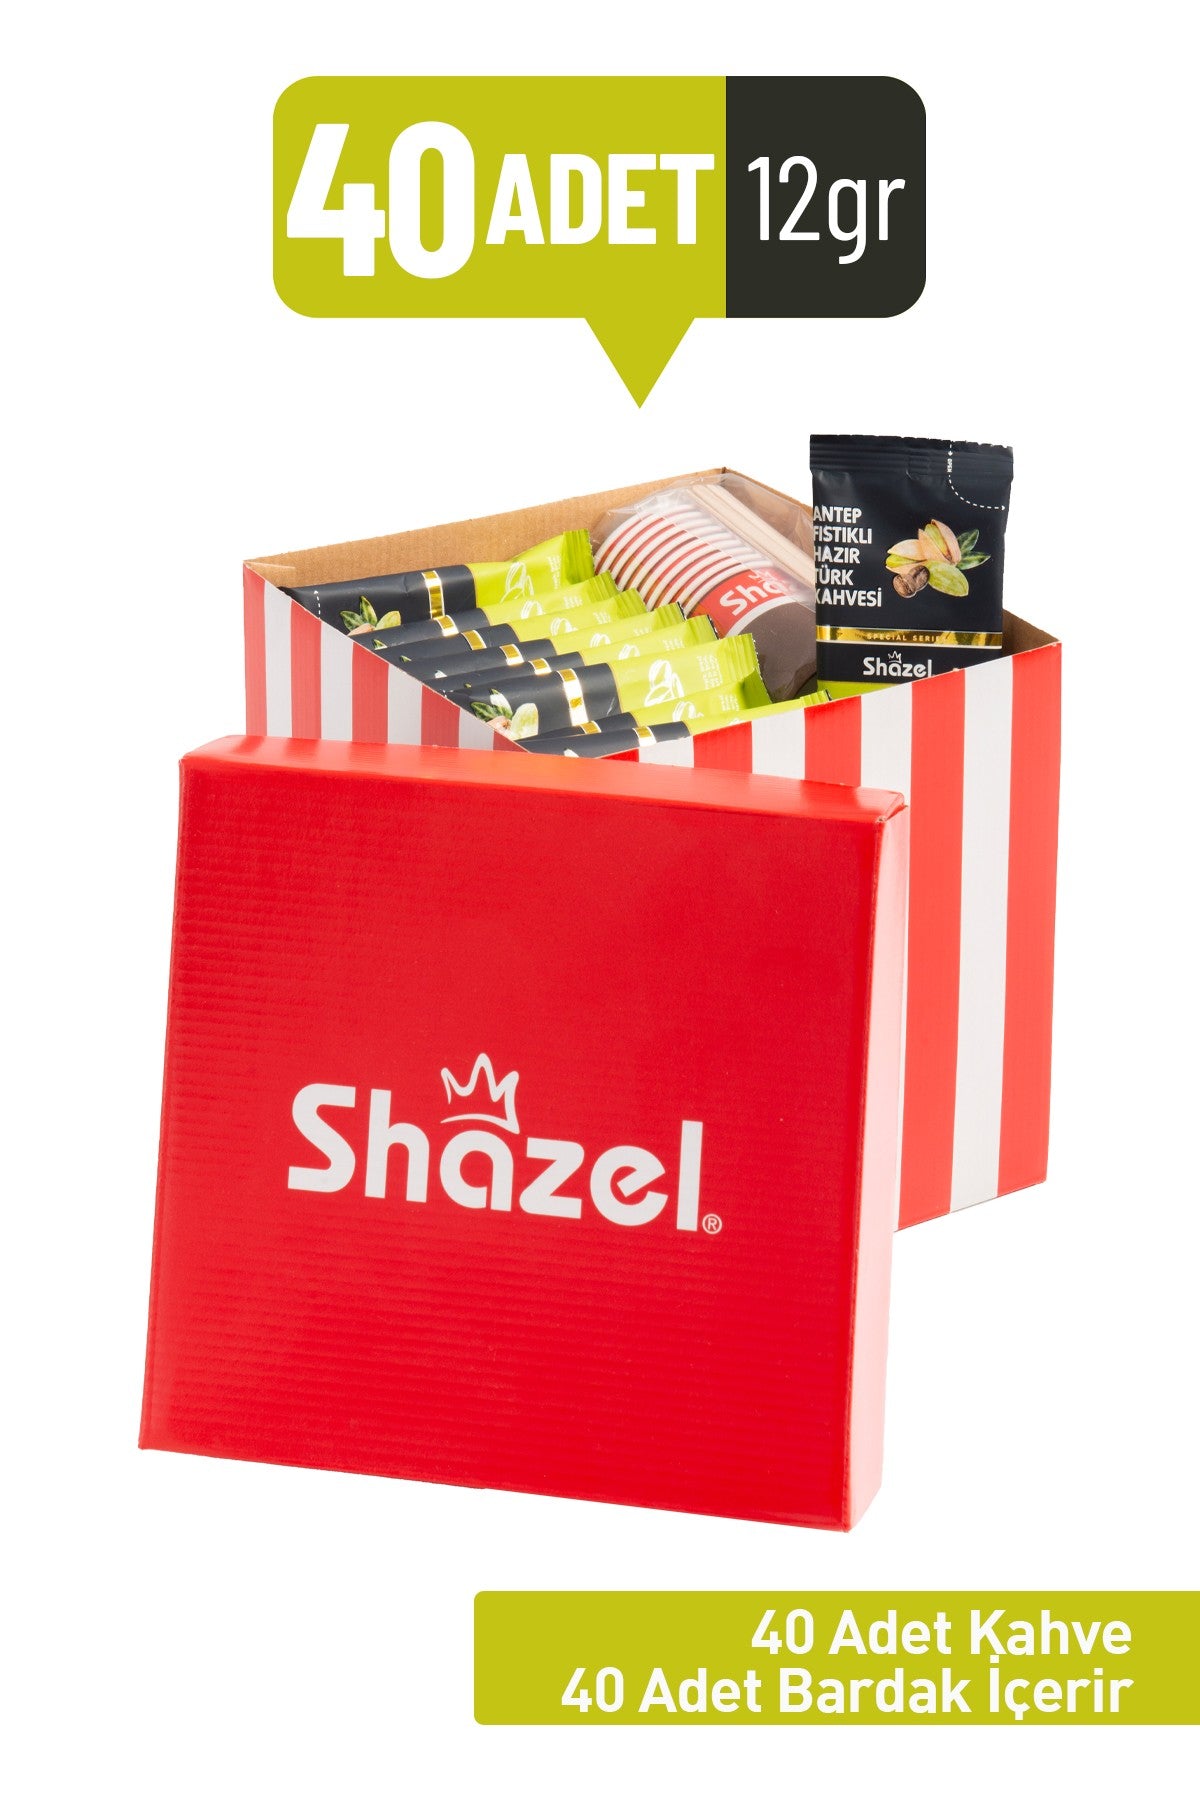 Shazel Pistachio Gift Office Set 12G 40Pcs